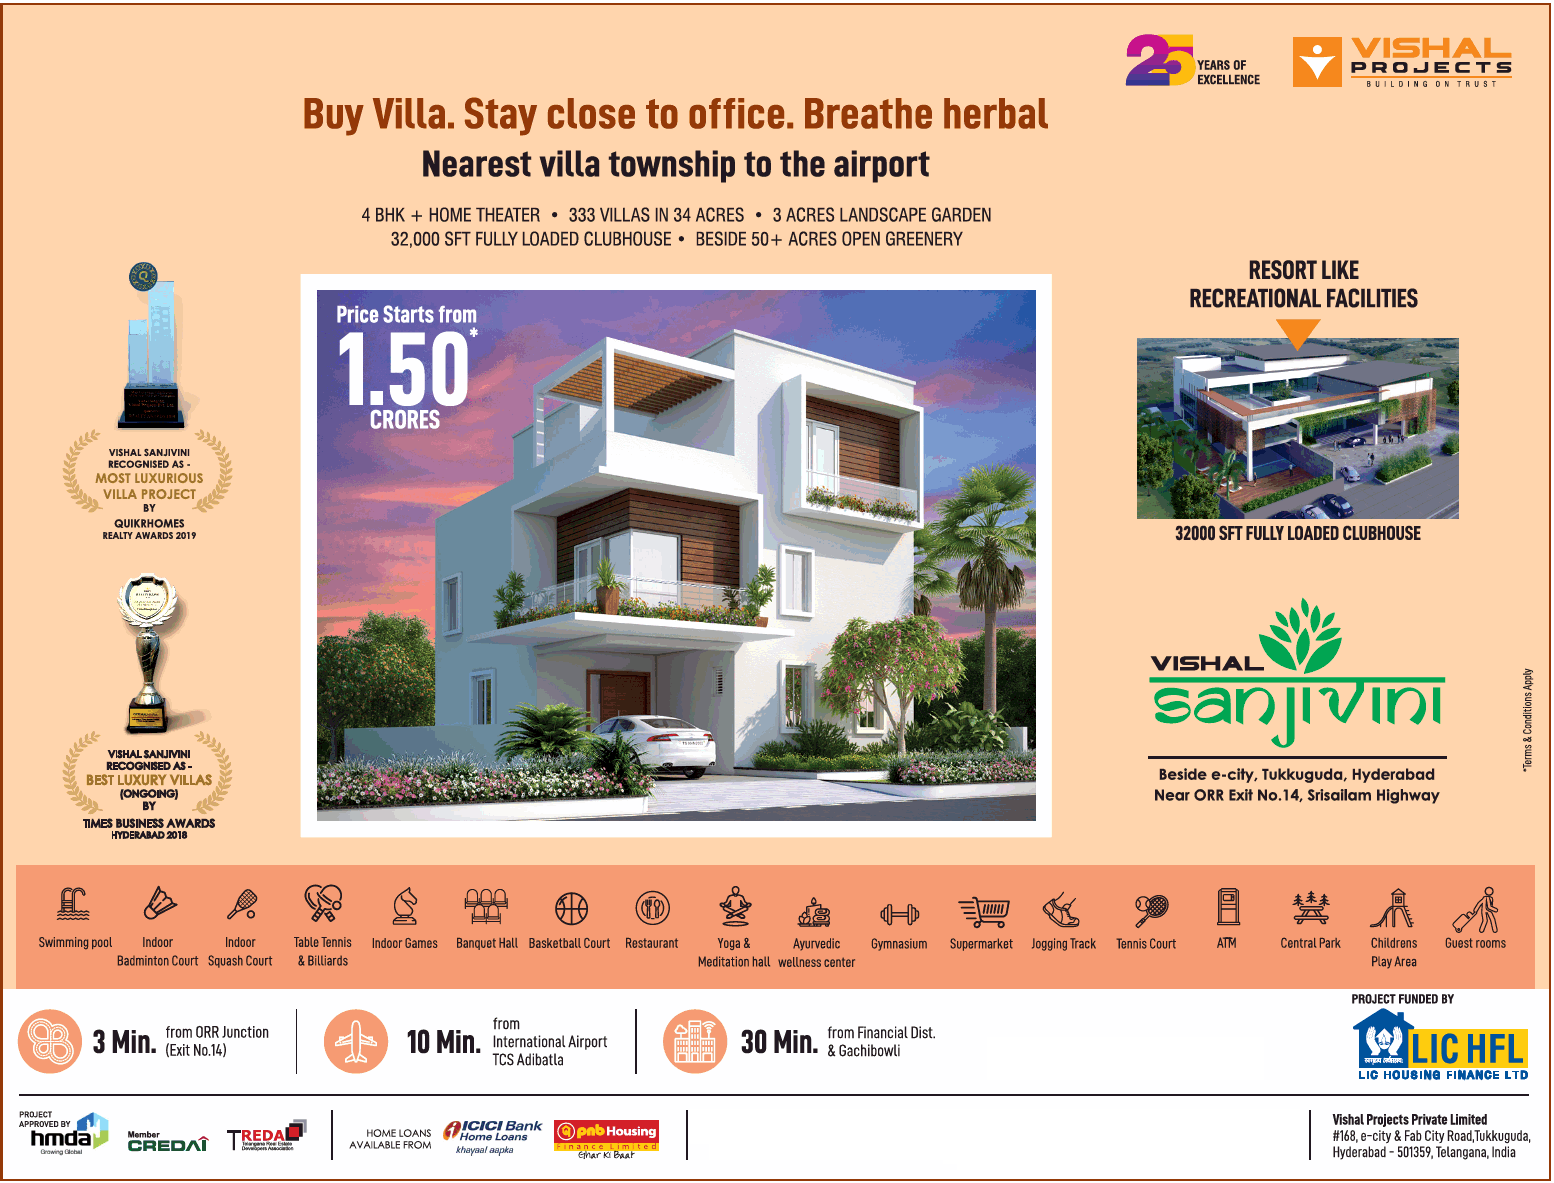 Buy villa at Vishal Sanjivini, Hyderabad and breathe herbal Update